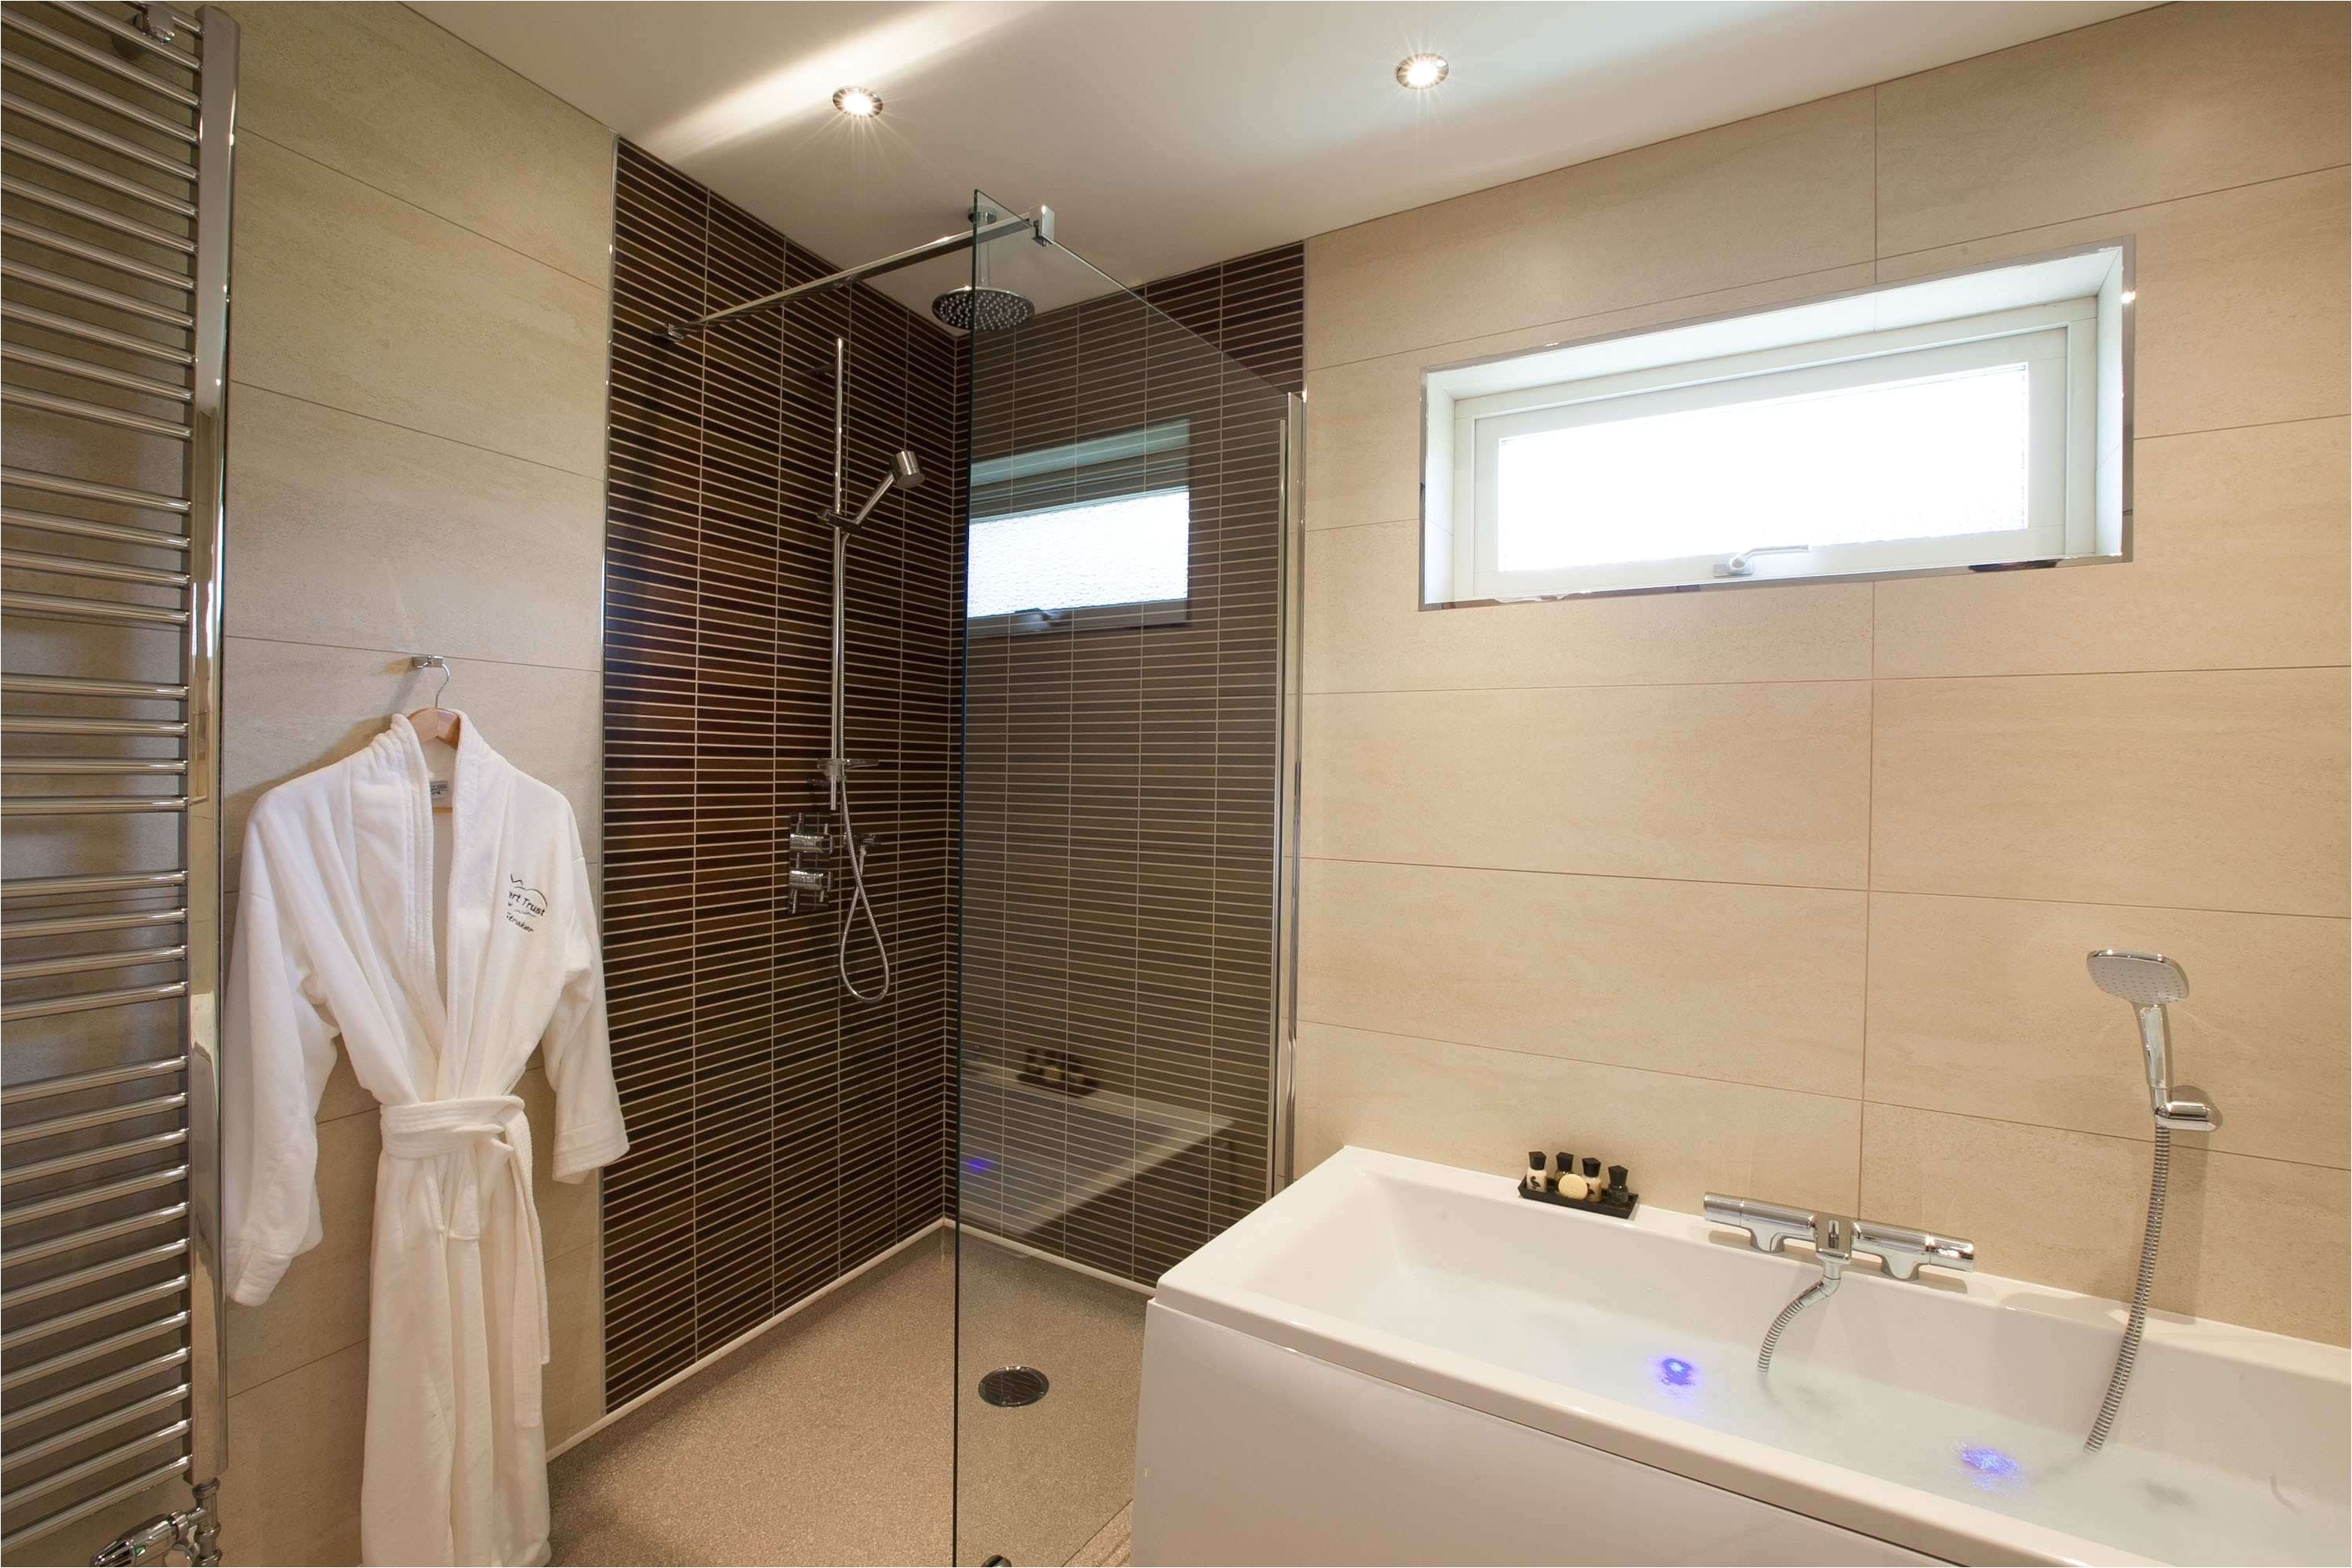 diy tile shower beautiful bathroom shower light new h sink install bathroom i 0d exciting diy